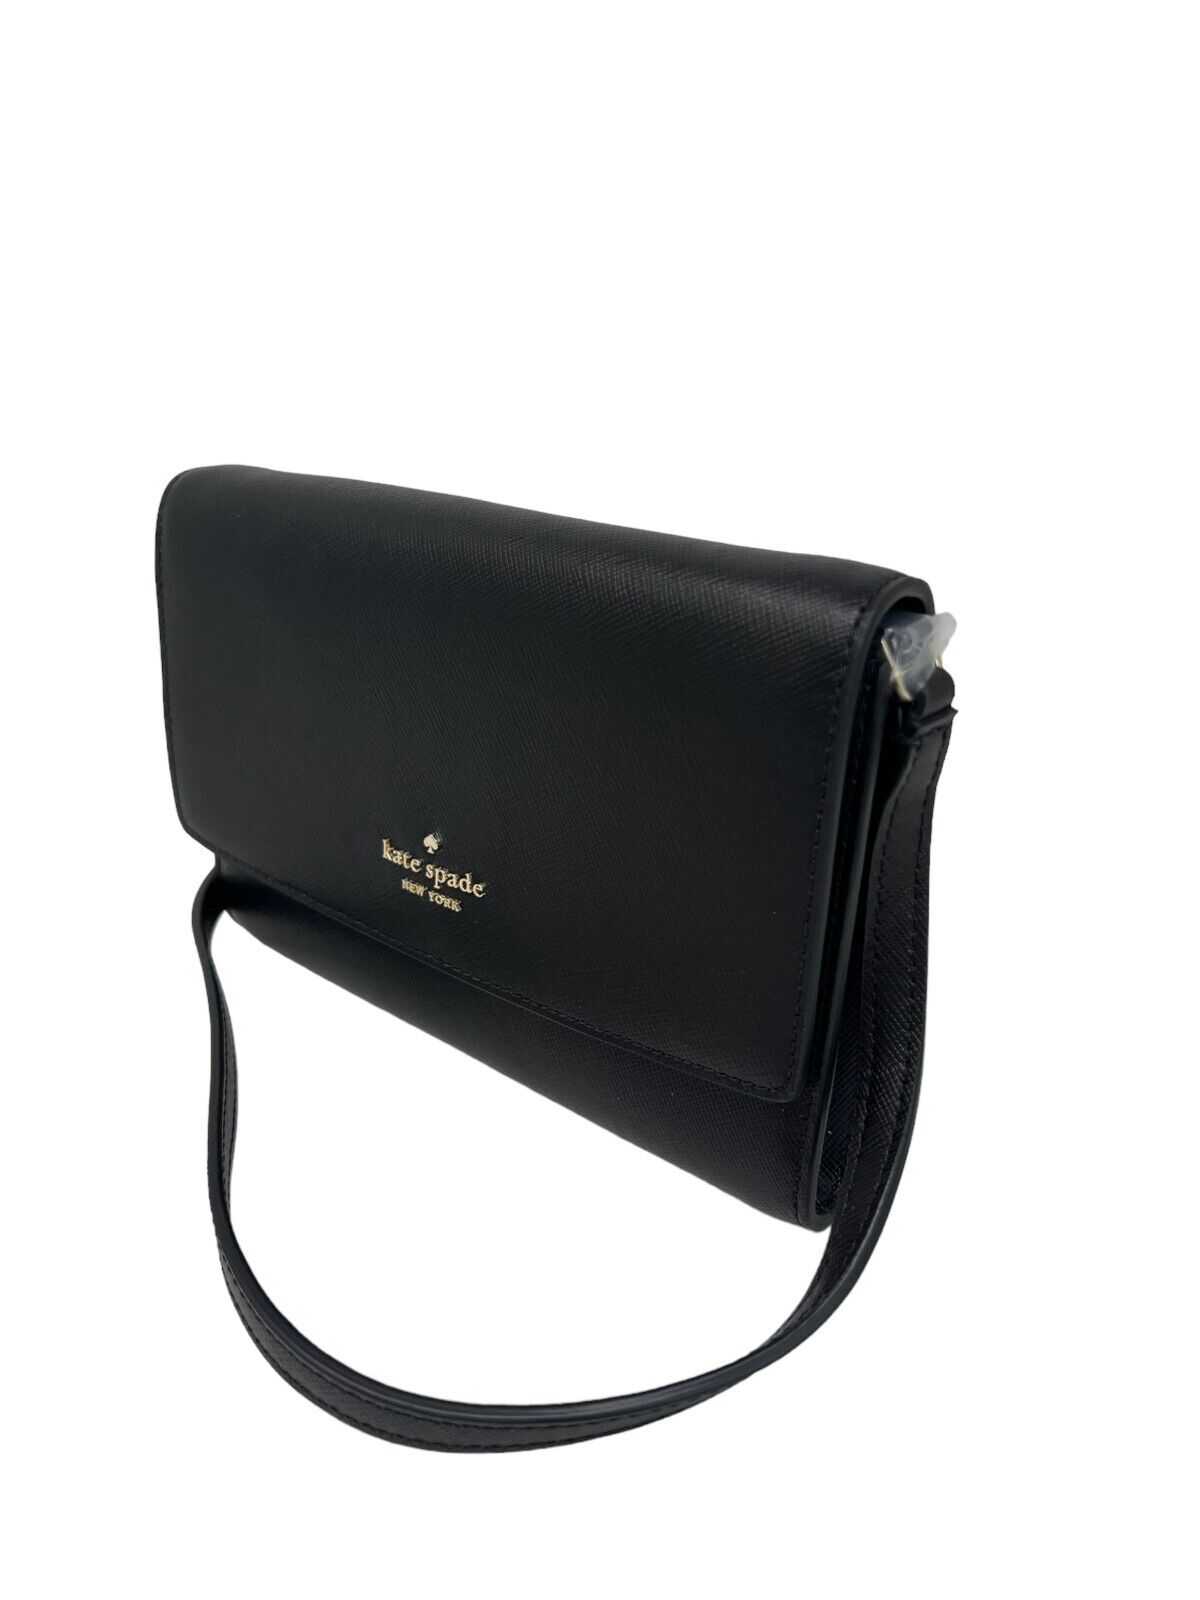 Kate Spade Perry Saffiano Leather Black Crossbody Bag K8709